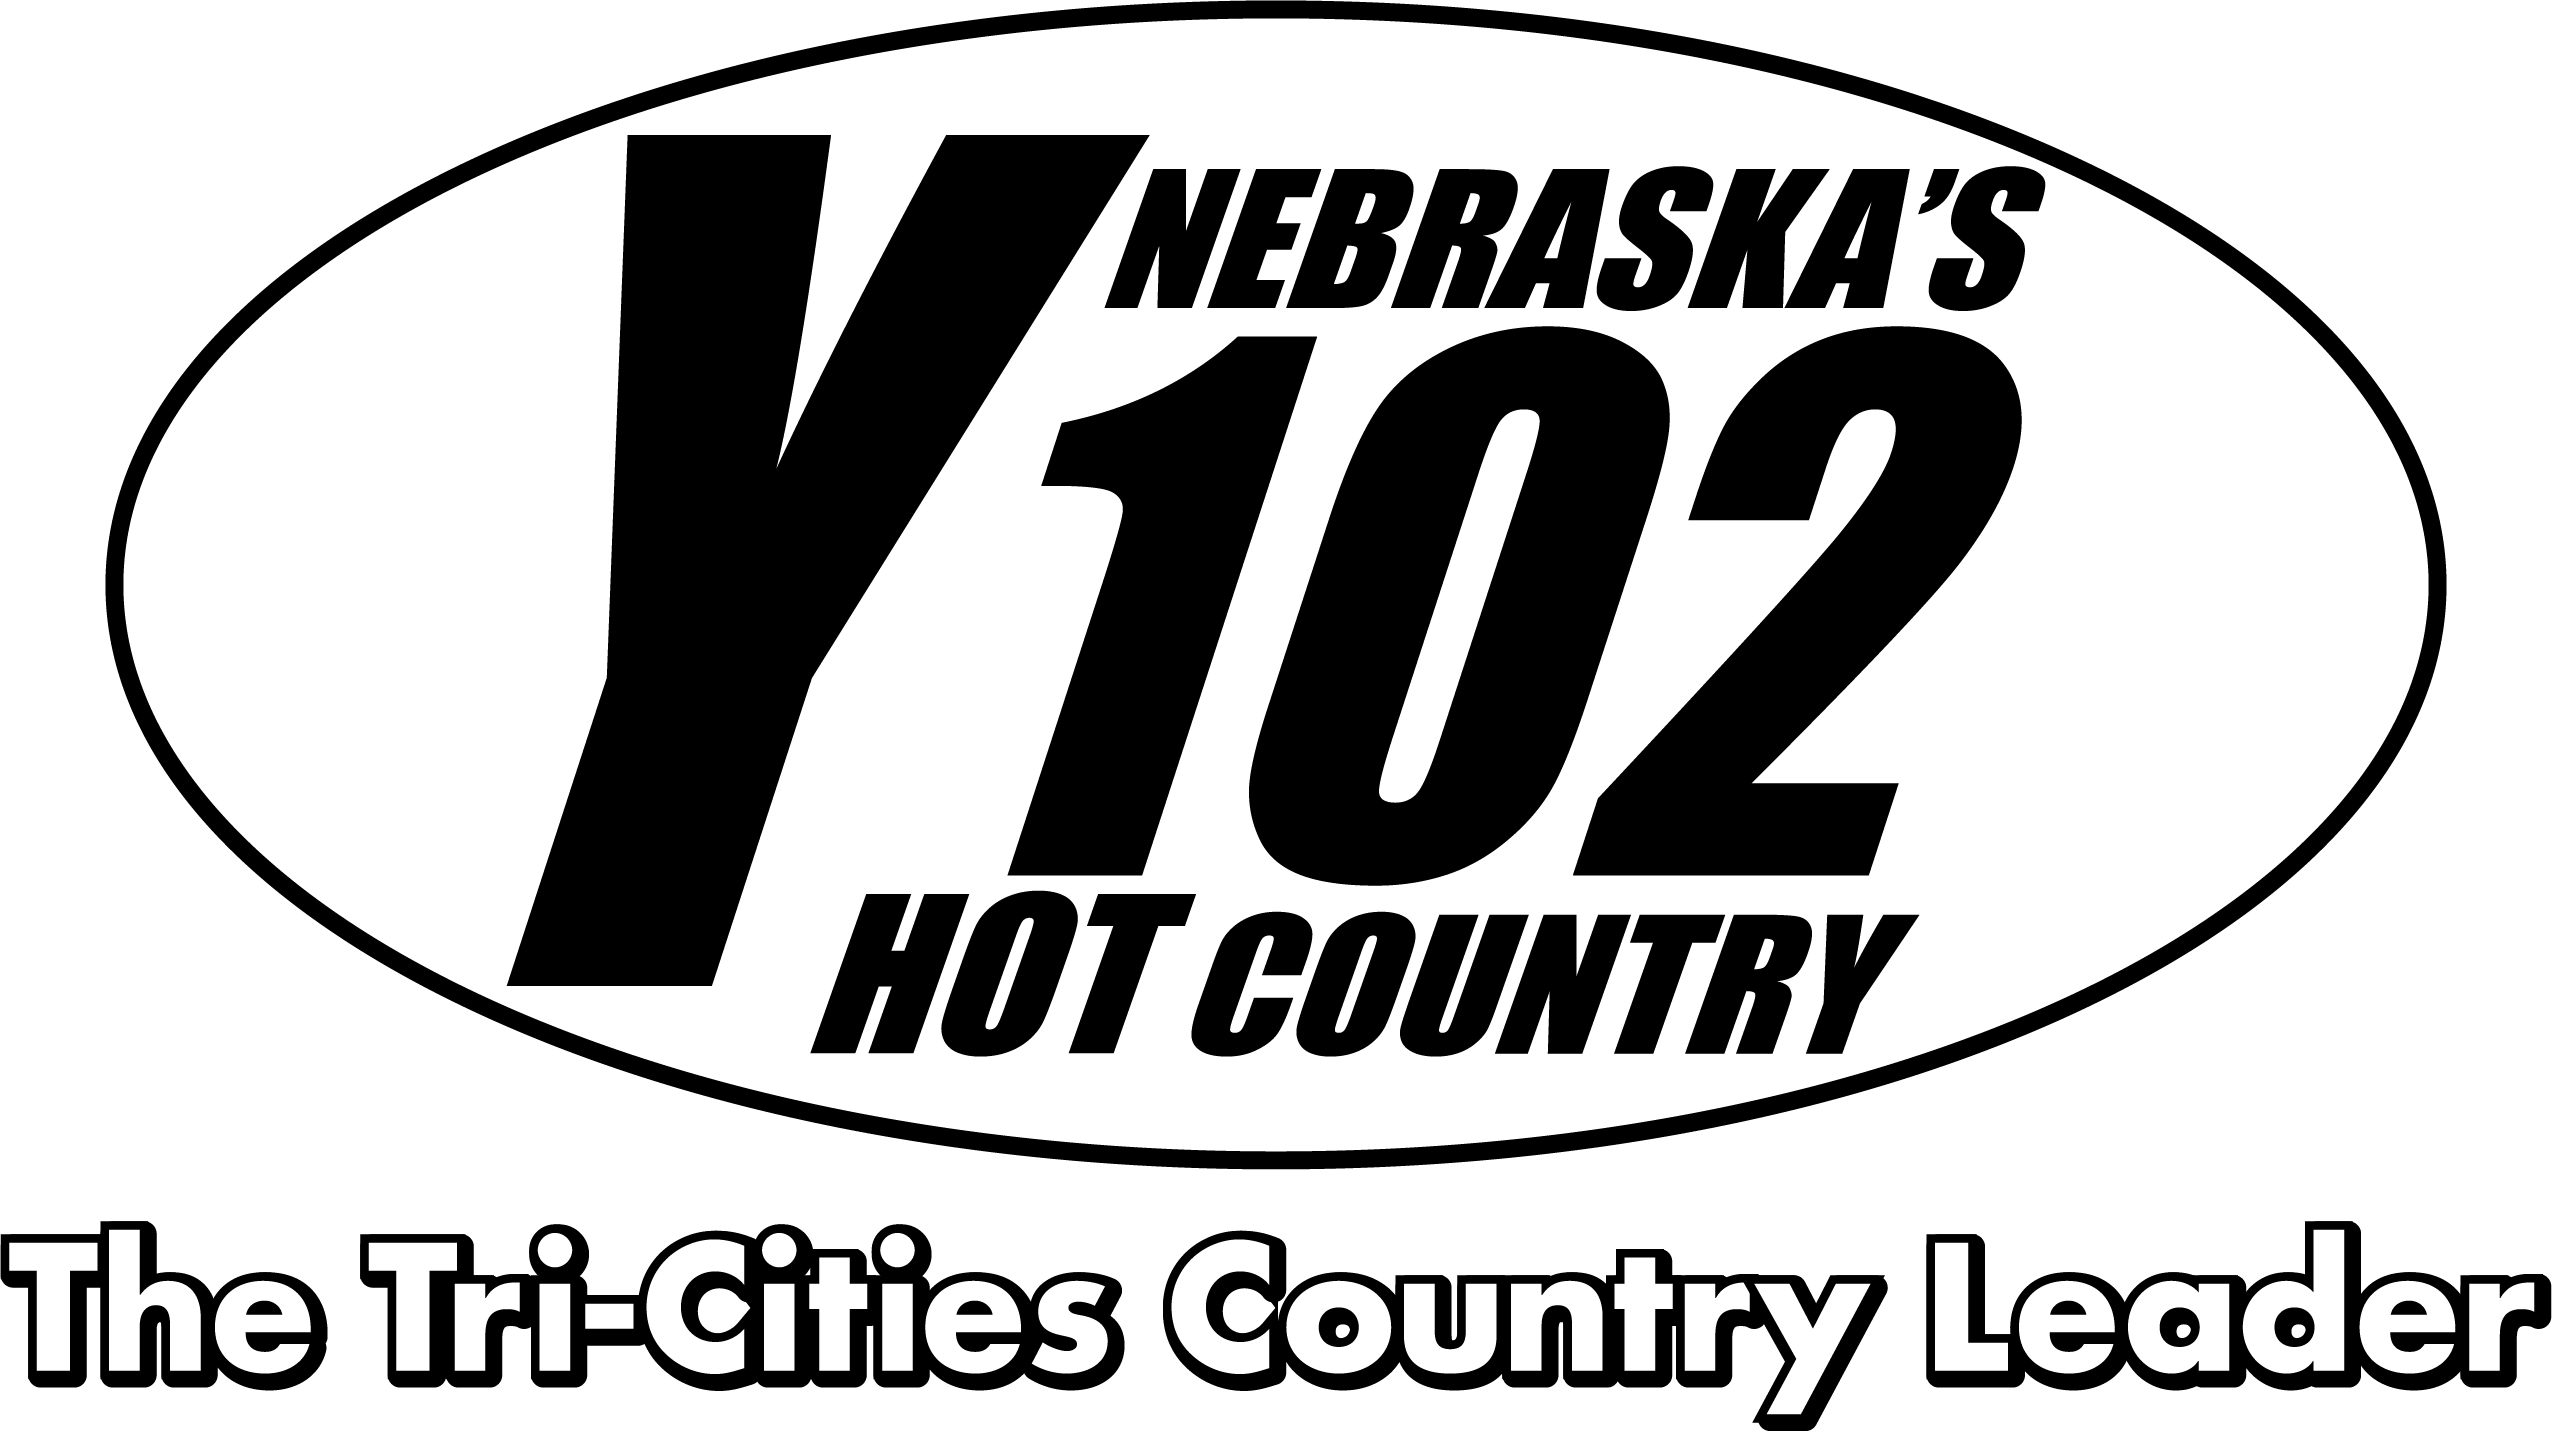 Y102 Nebraska's Hot Country